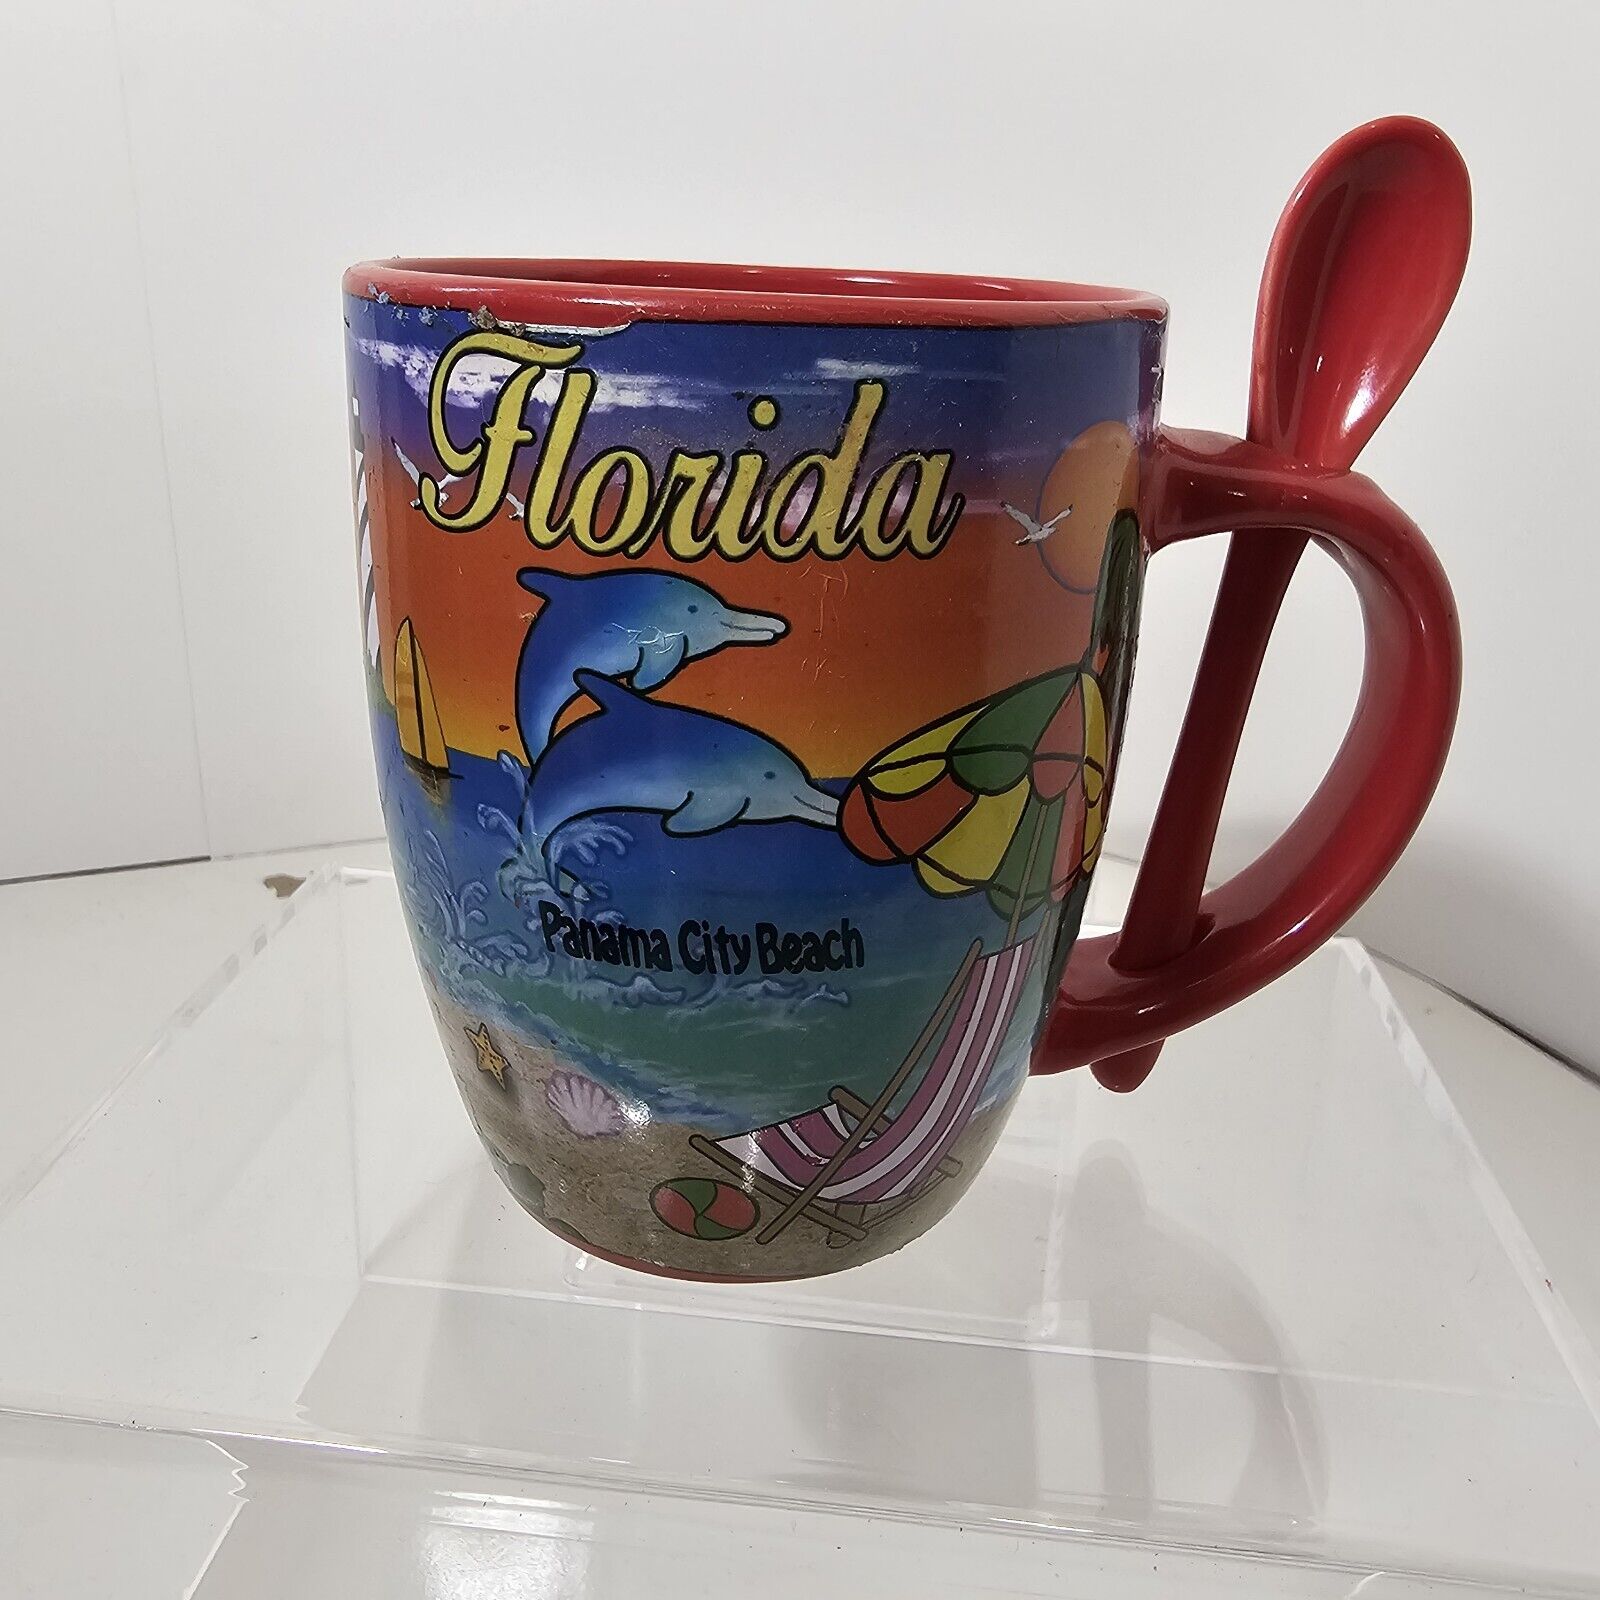 Panama City Beach Florida Souvenir Coffee Mug with Removable Spoon and Dolphins